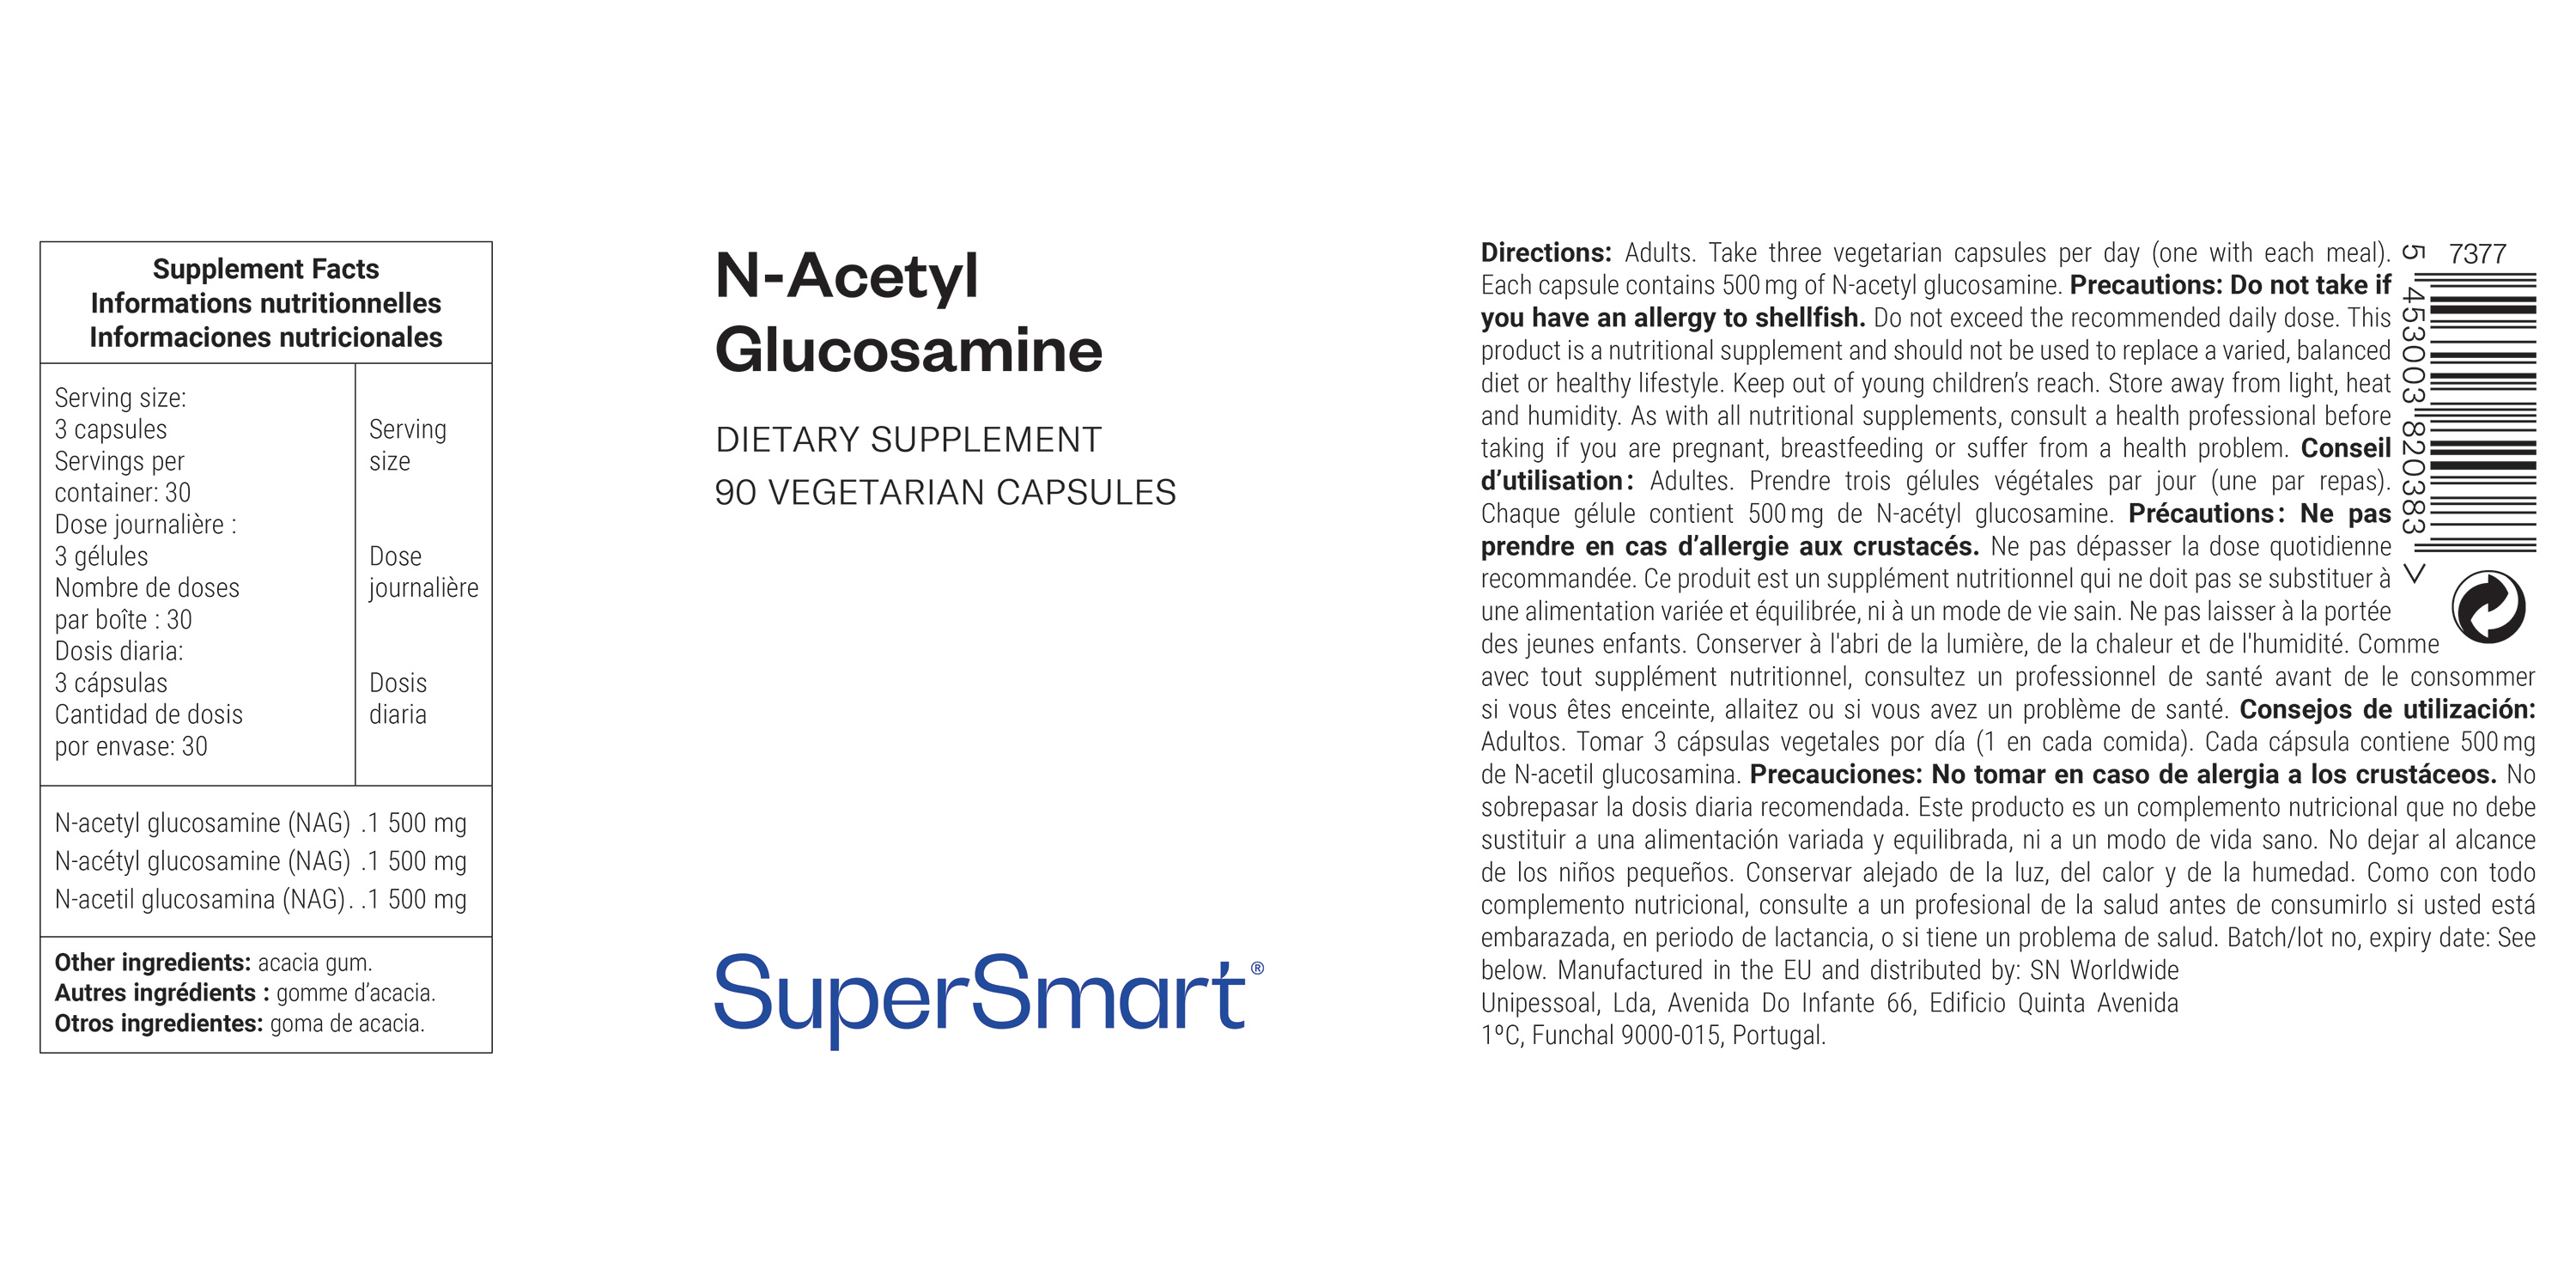 N-Acetyl Glucosamine (NAG)